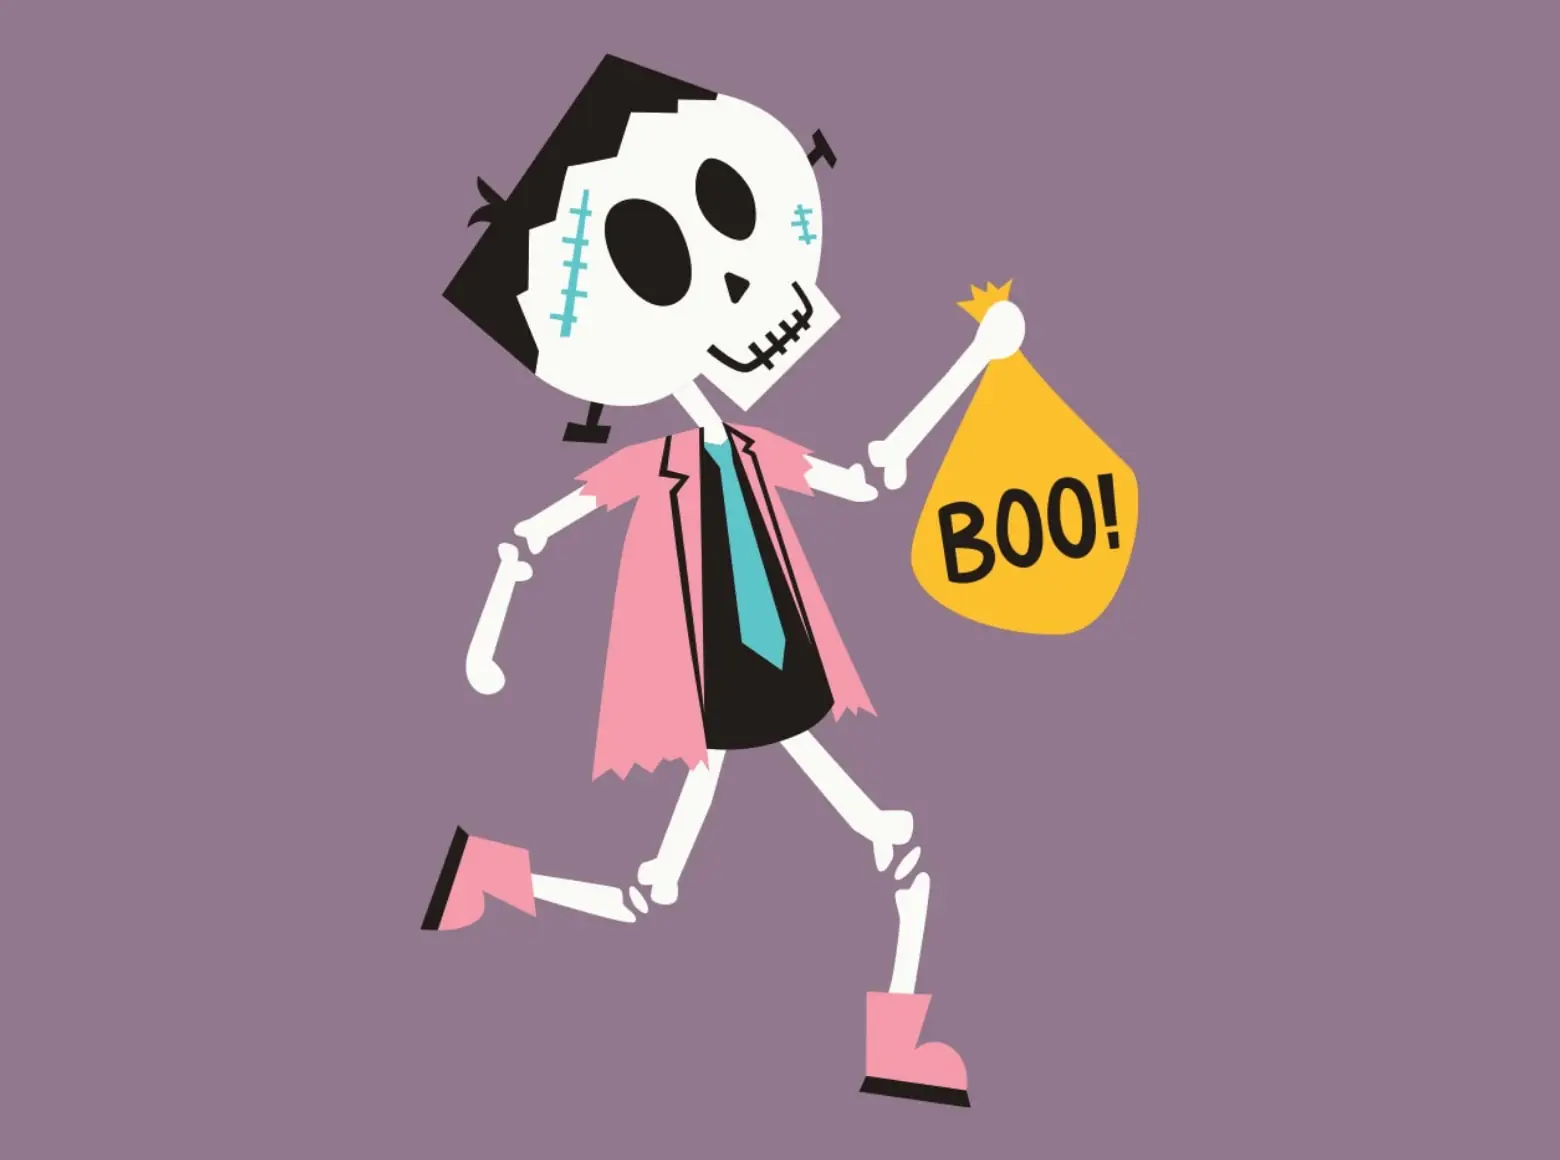 illustration of a skeleton frankenstein holding a bag that says "boo!"